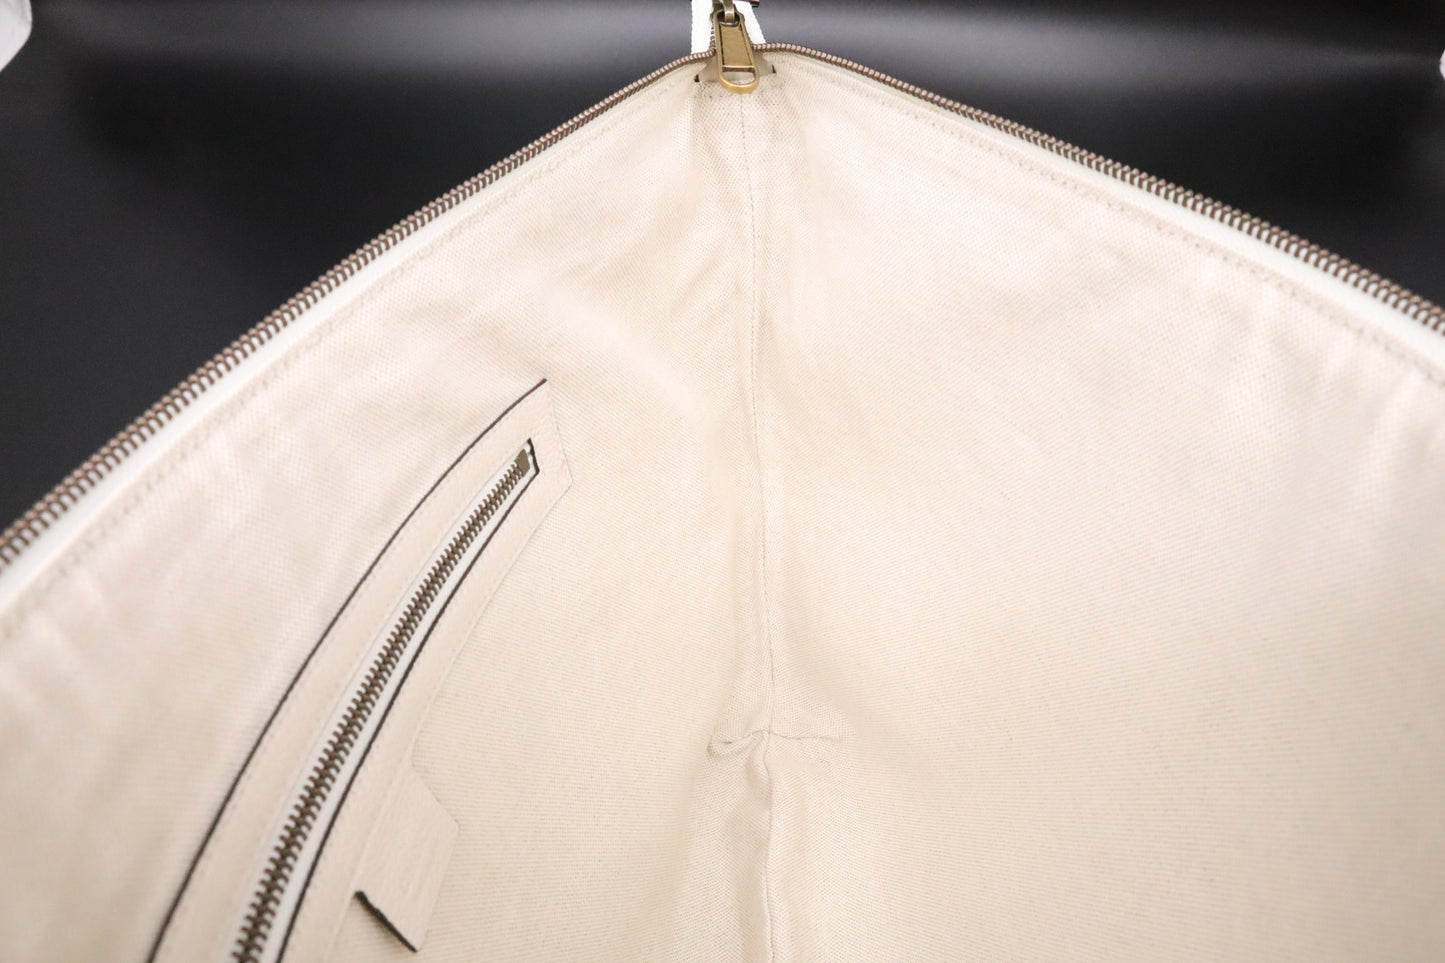 Gucci Shoulder Bag in White Leather